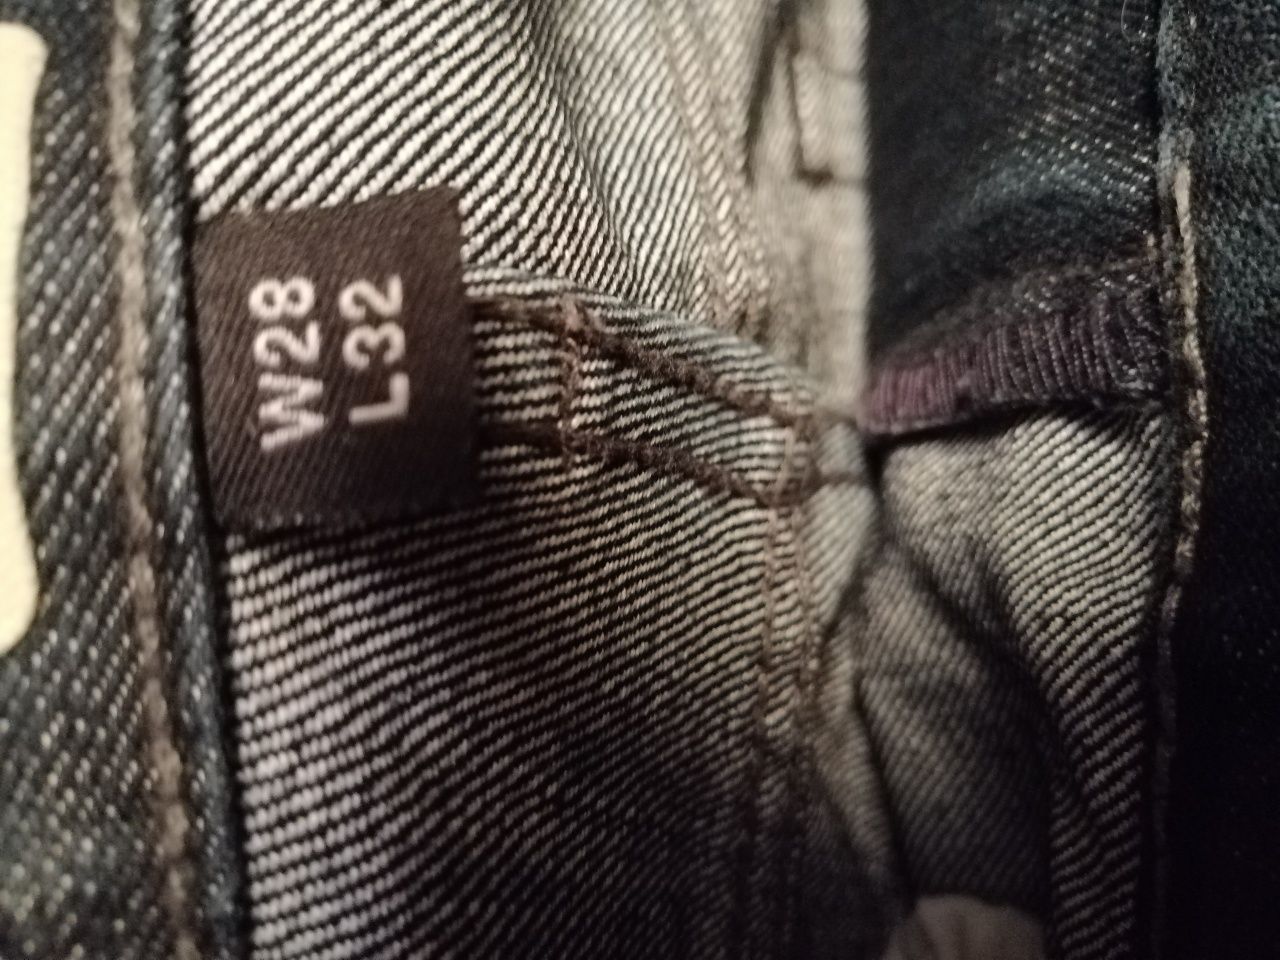 Spodnie proste jeansy kolor granat